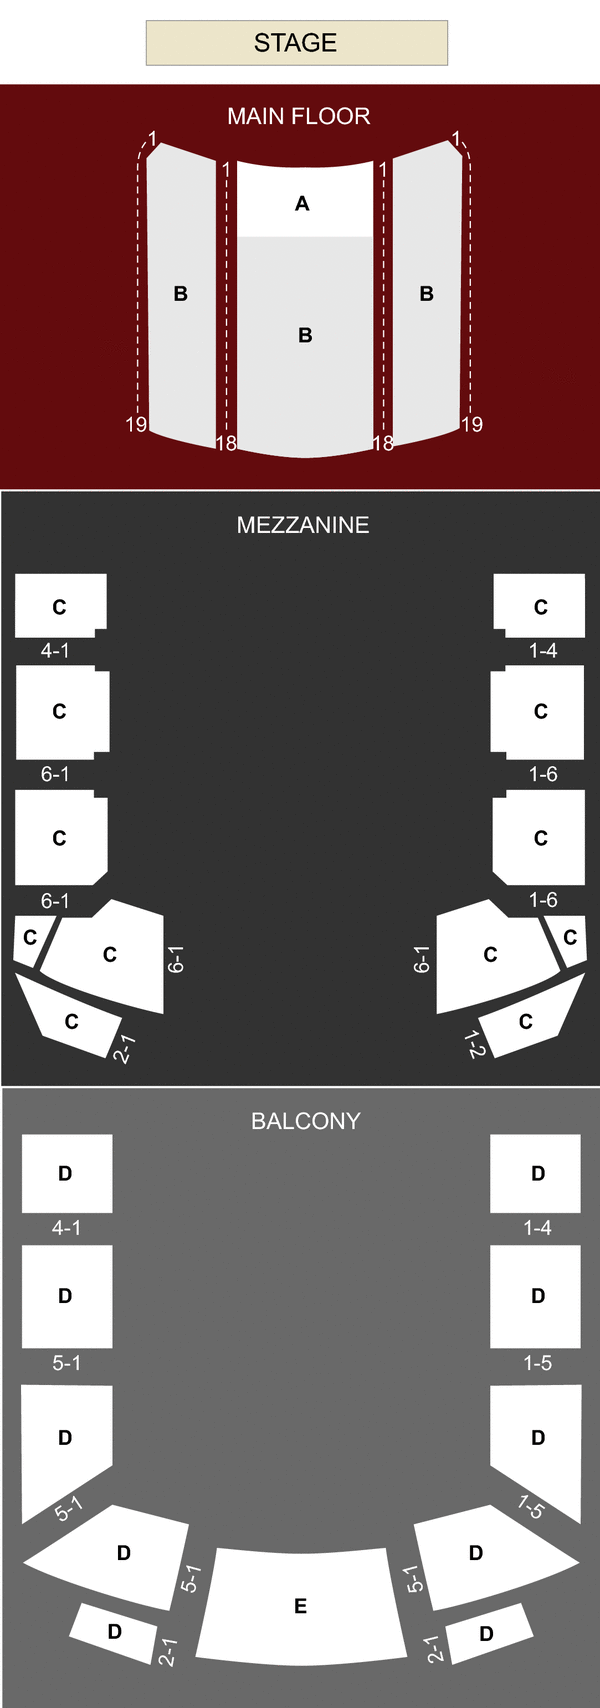 Casino Avalon Ballroom Seating Chart